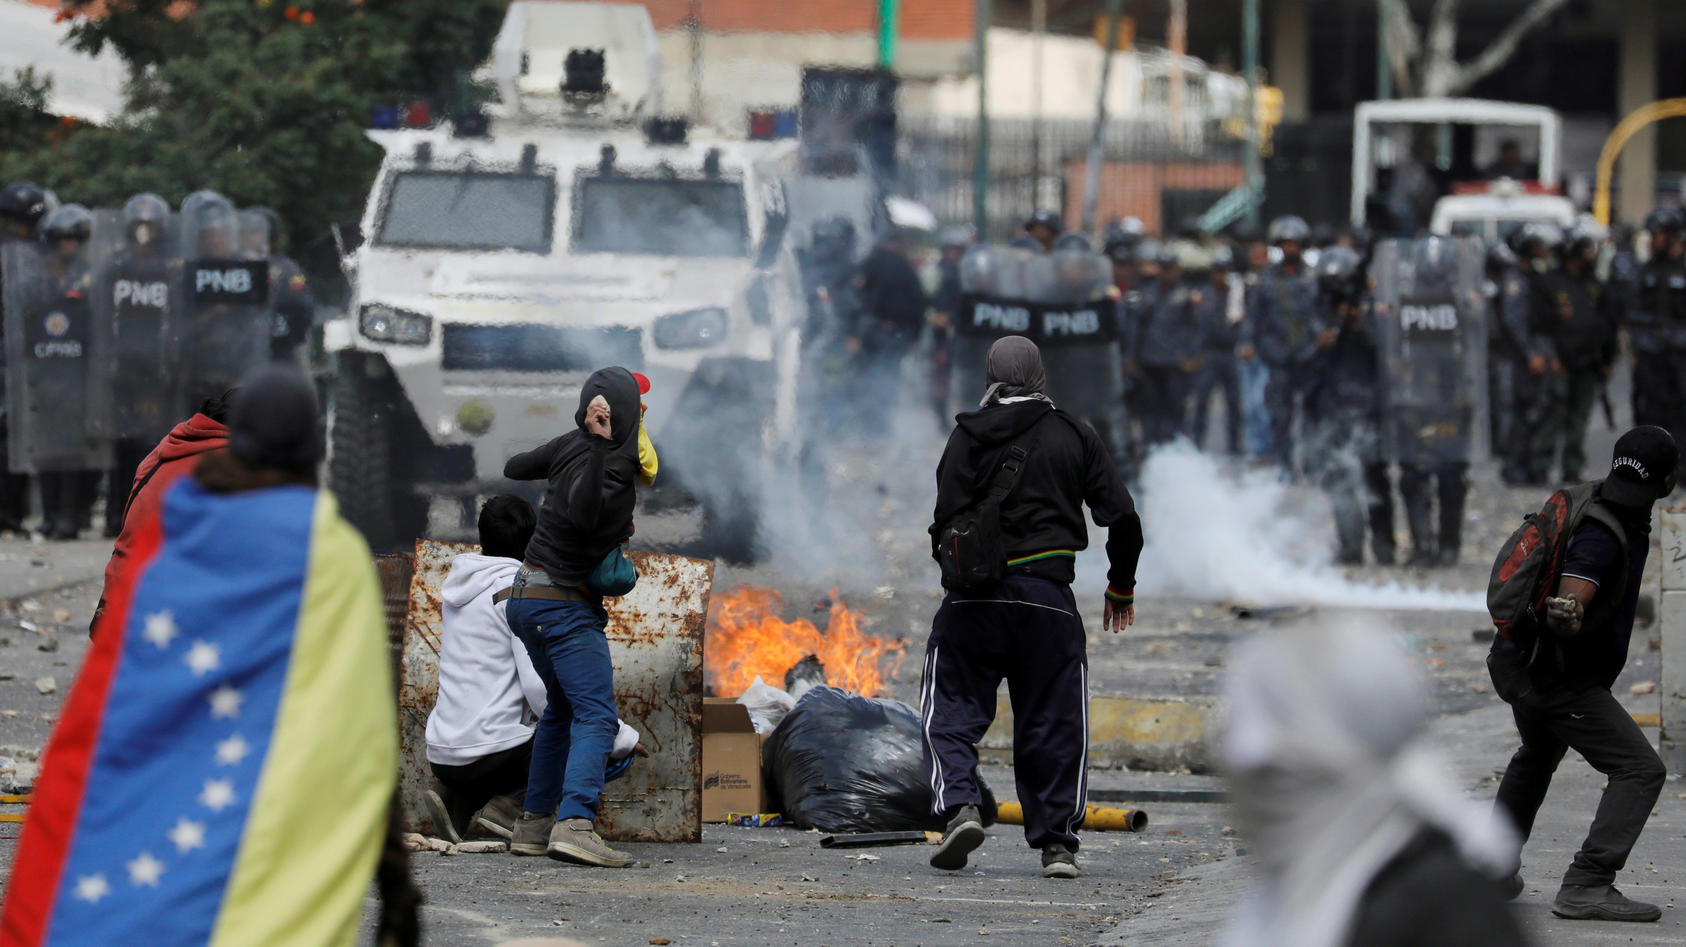 FILE PHOTO: Demonstrators clash with police during a protest against Venezuelan President Nicolas Maduro's government in Caracas, Venezuela January 23, 2019. REUTERS/Manaure Quintero/File Photo